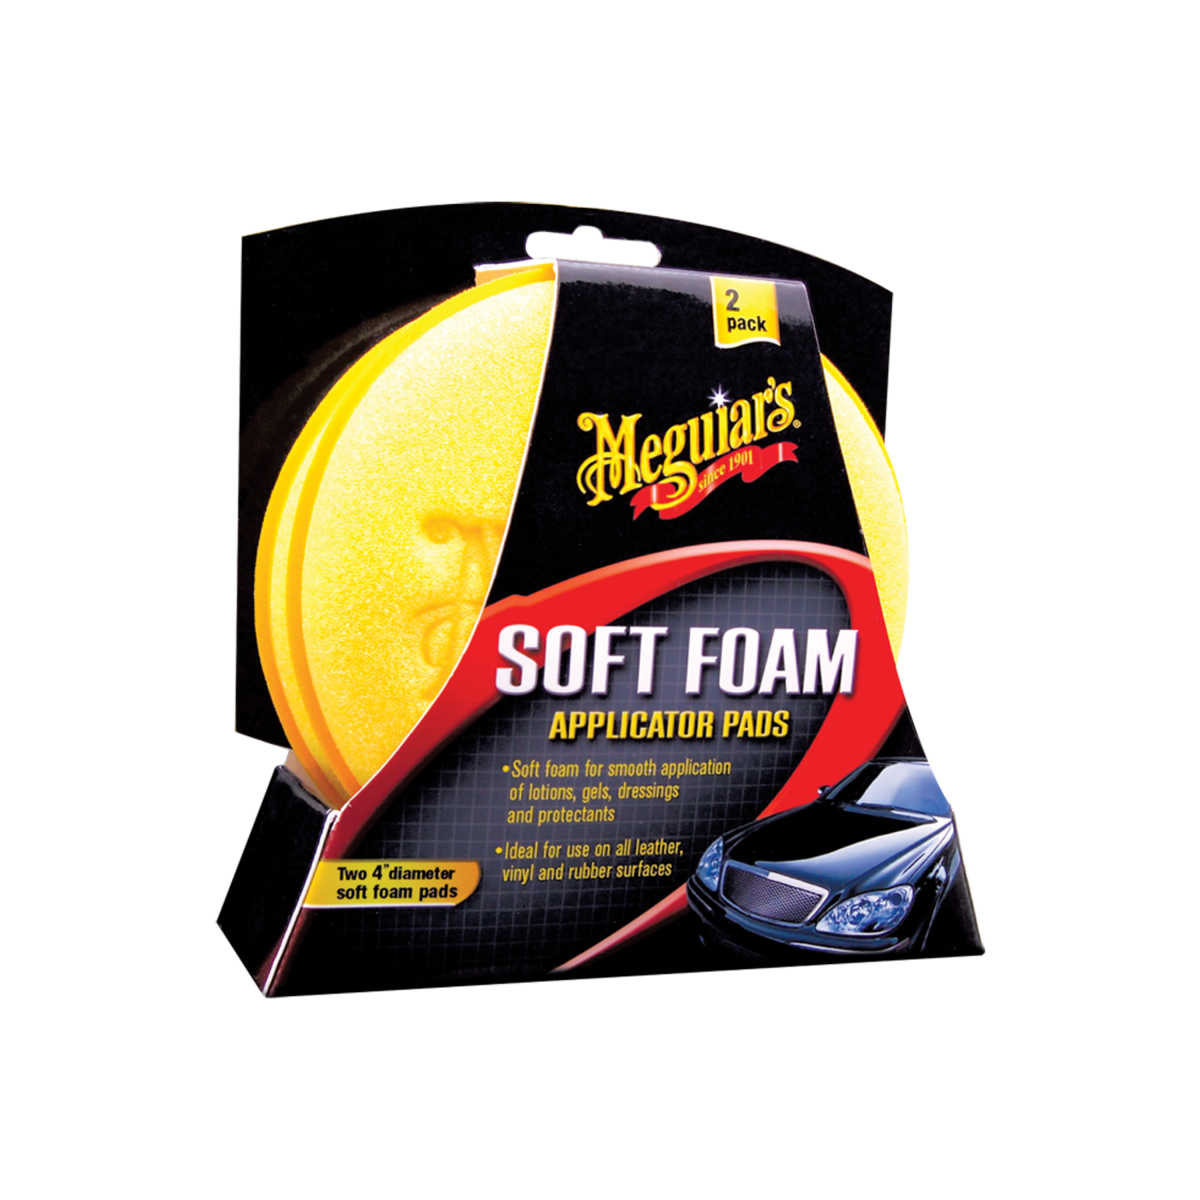  Meguiar's Soft Foam Applicator Pad